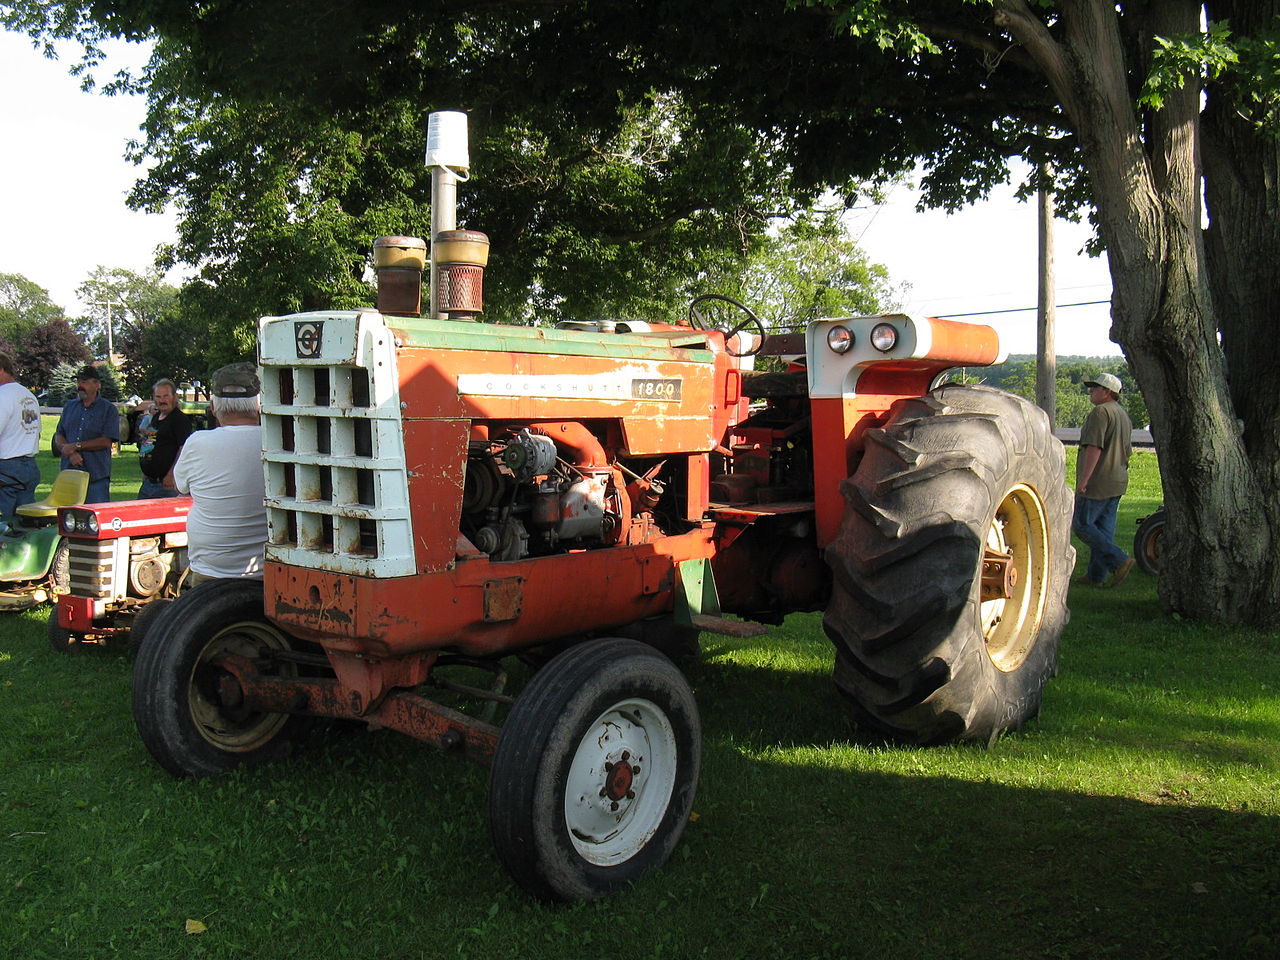 File:Cockshutt 1800 tractor.jpg - Wikimedia Commons